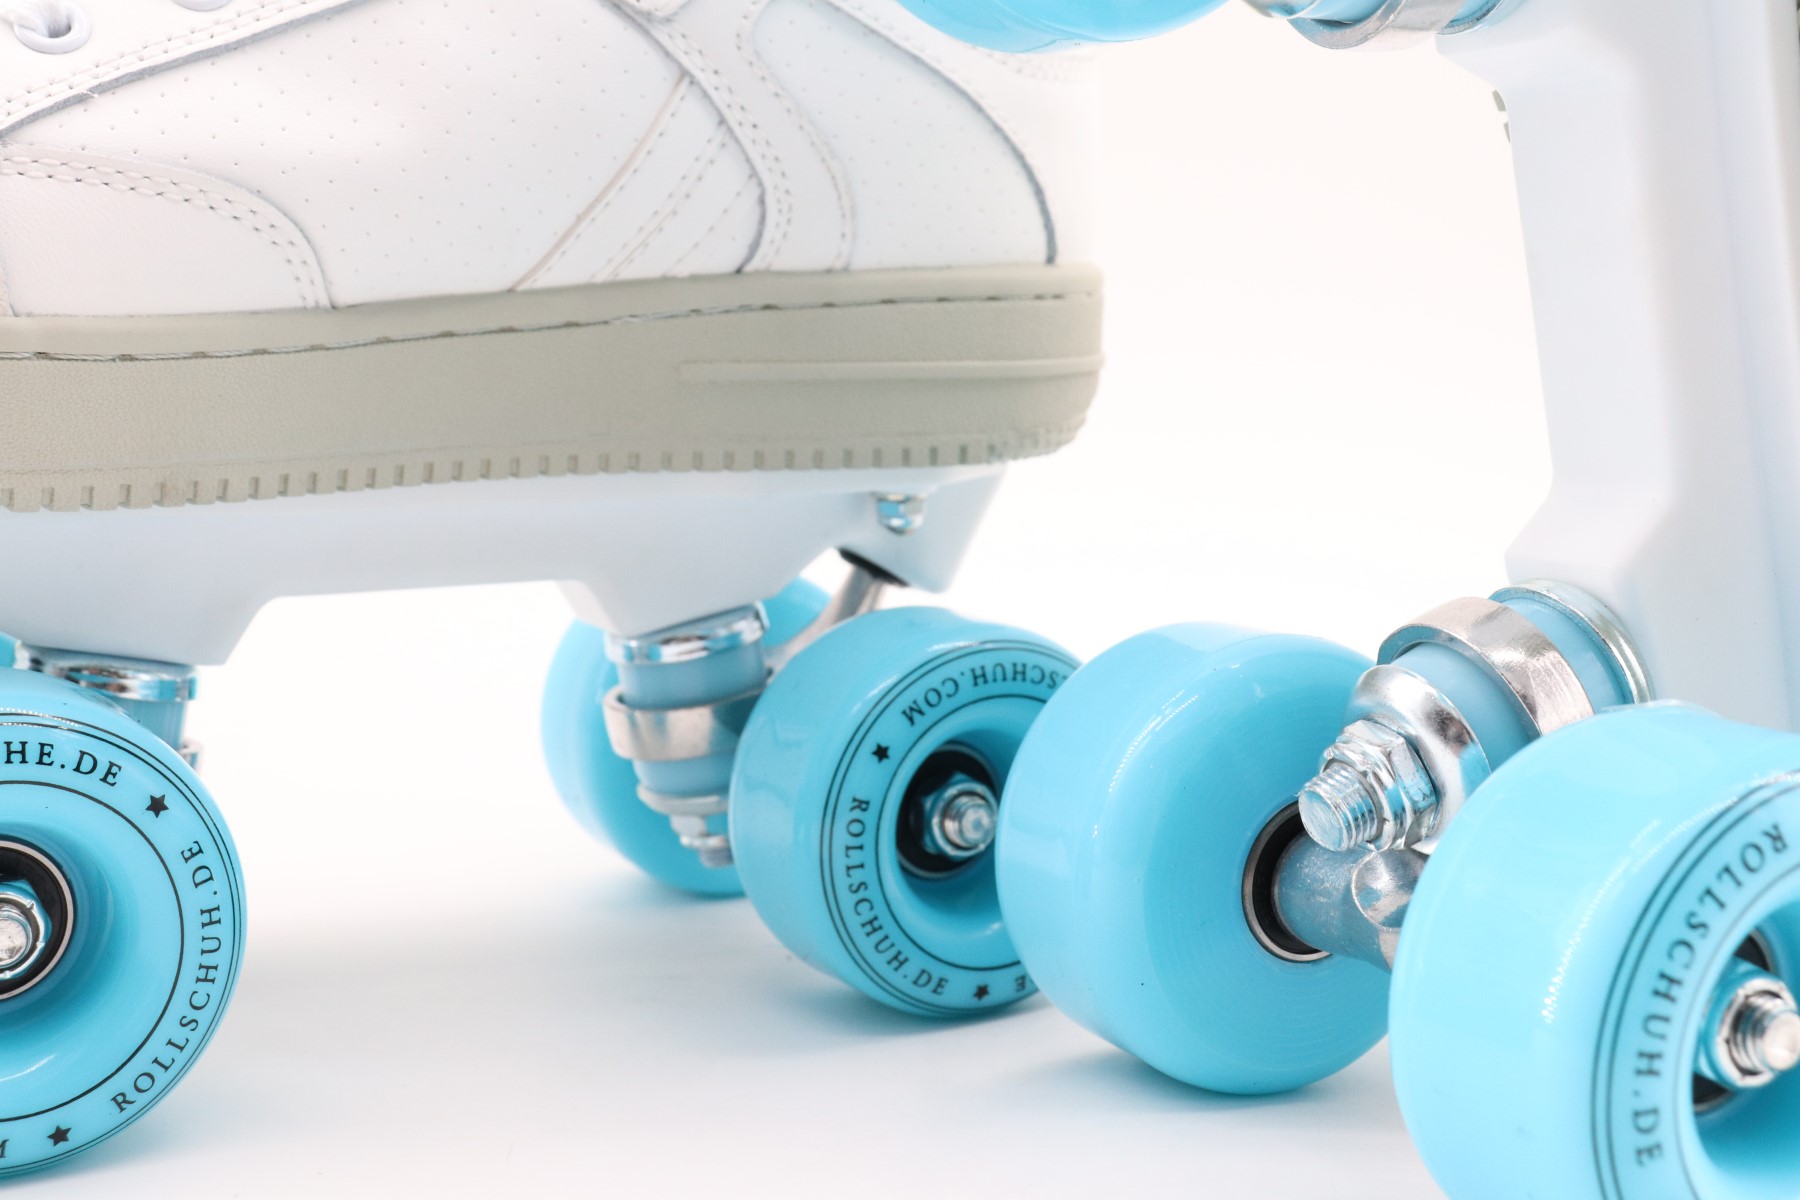 WSS Blue Line Roller Skates